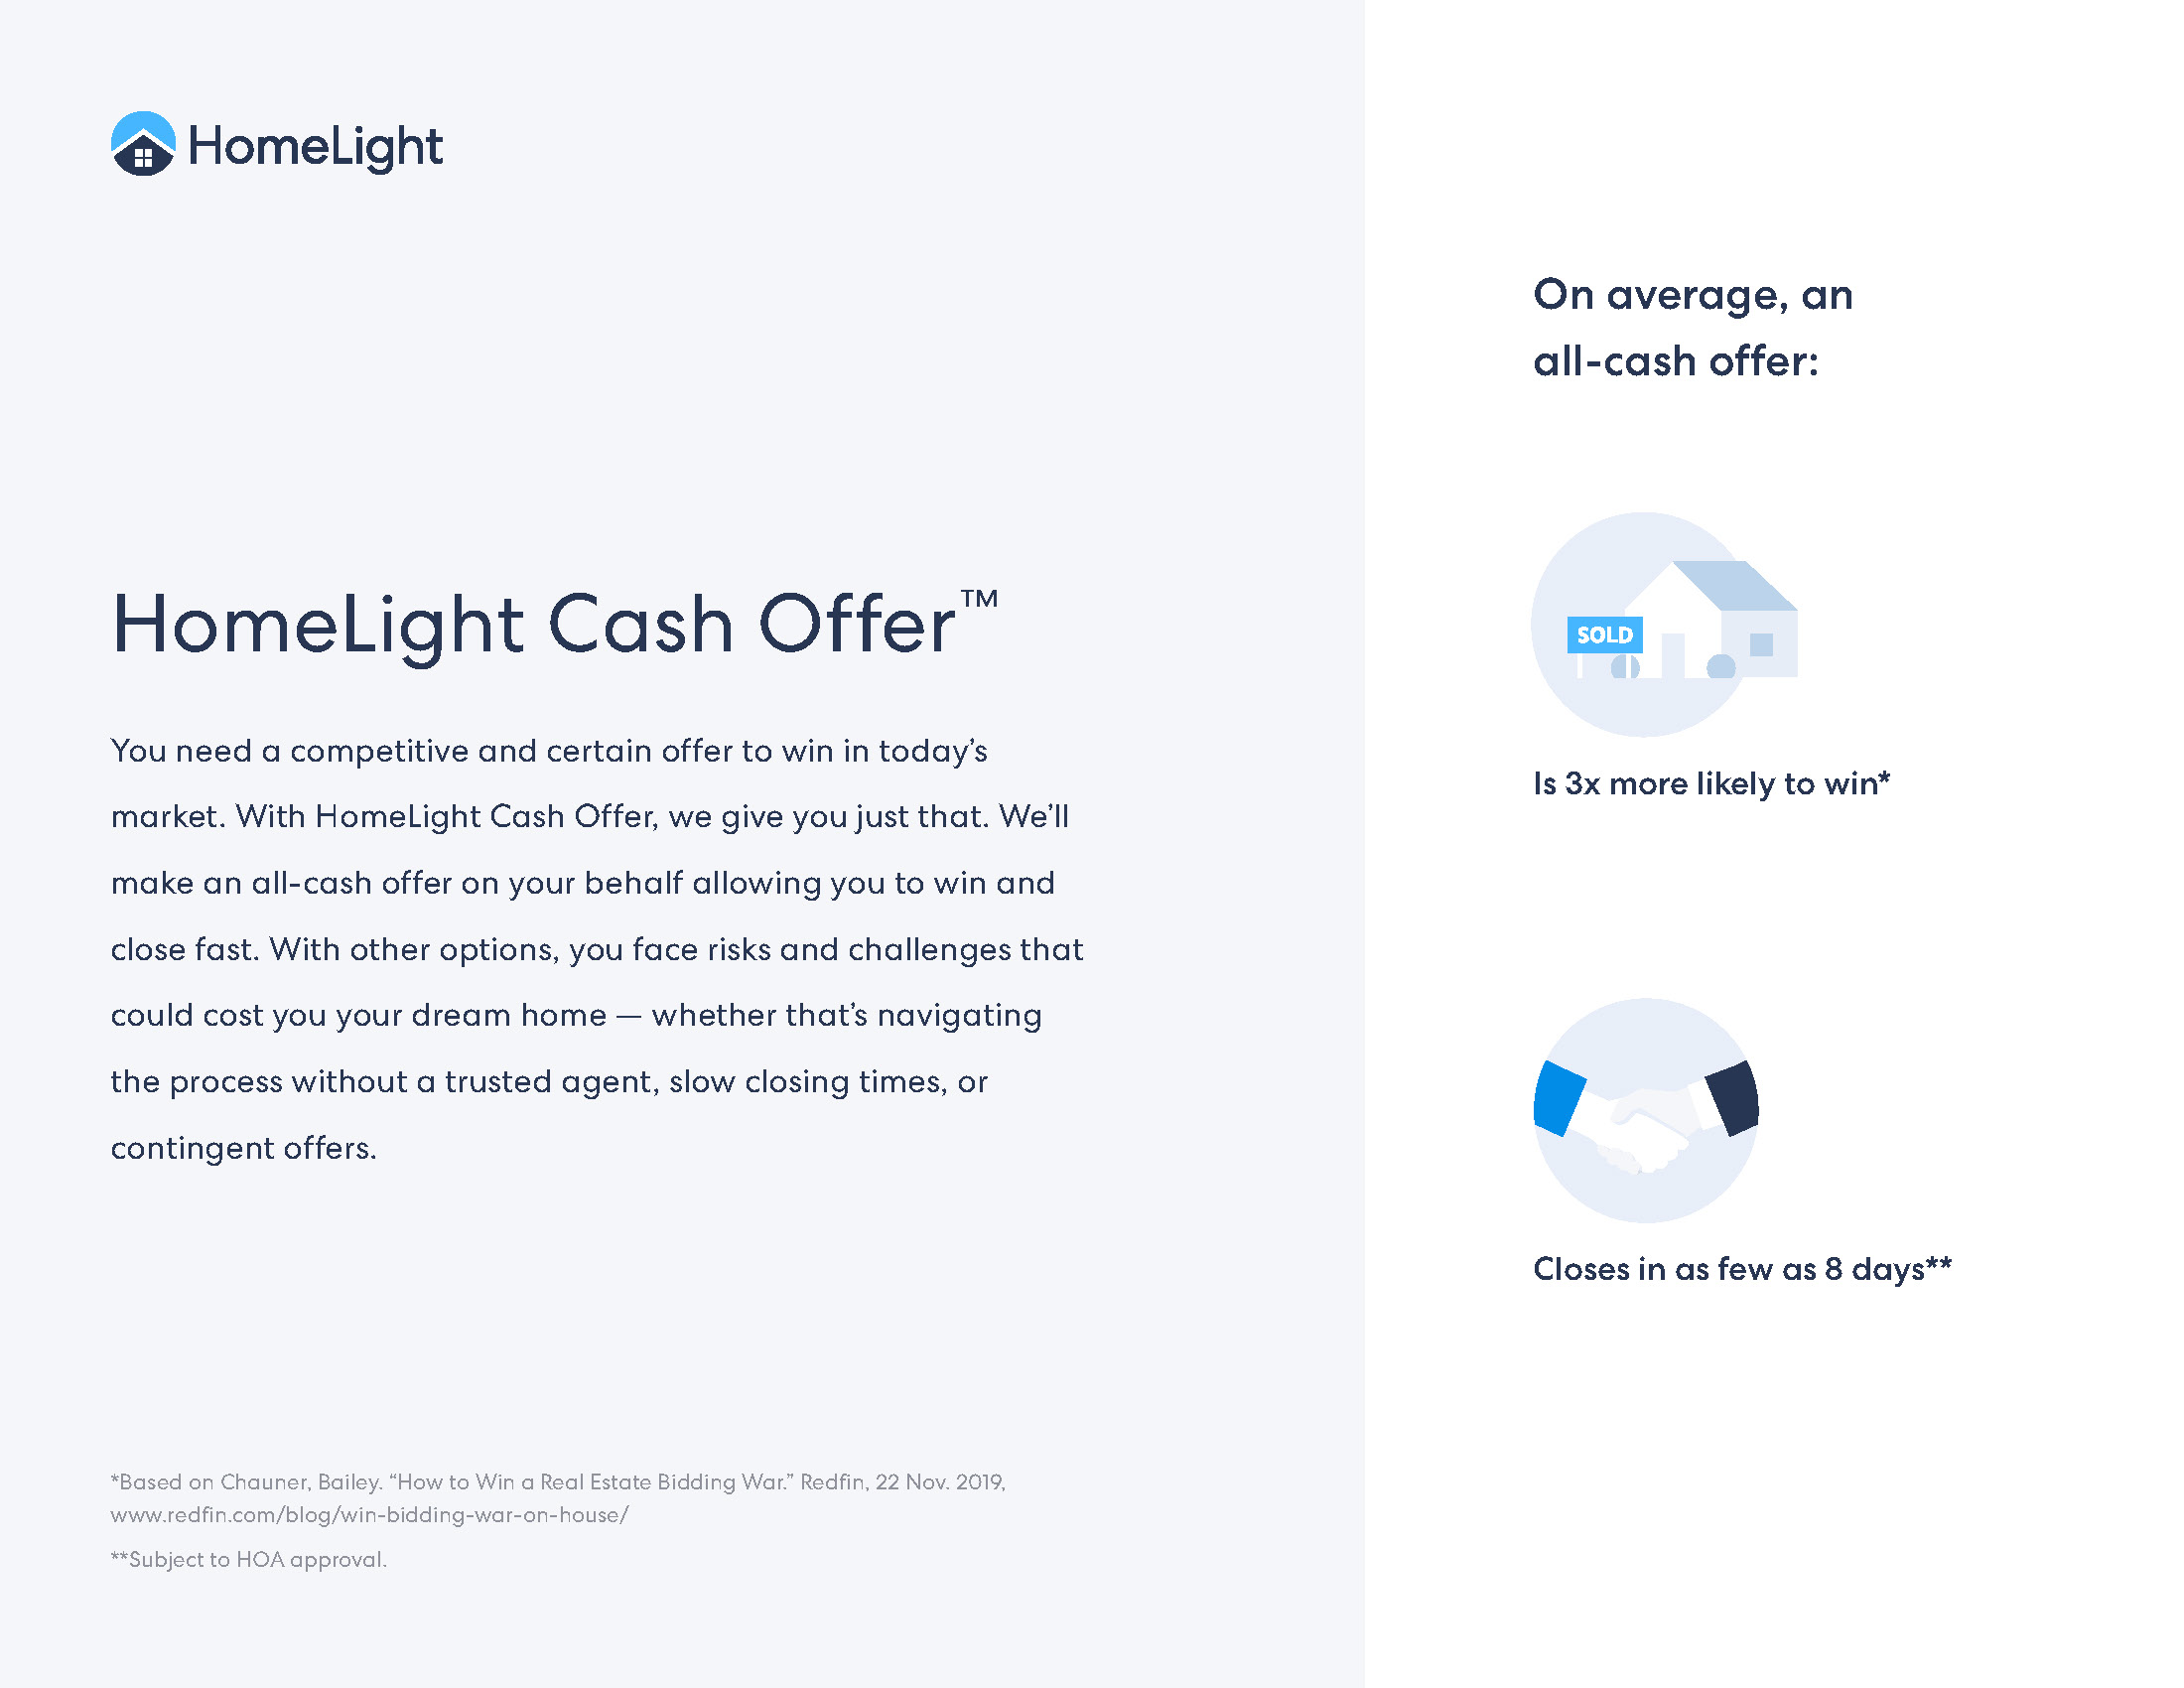 [FL] HomeLight Cash Offer vs Other Options_Page_1.jpg